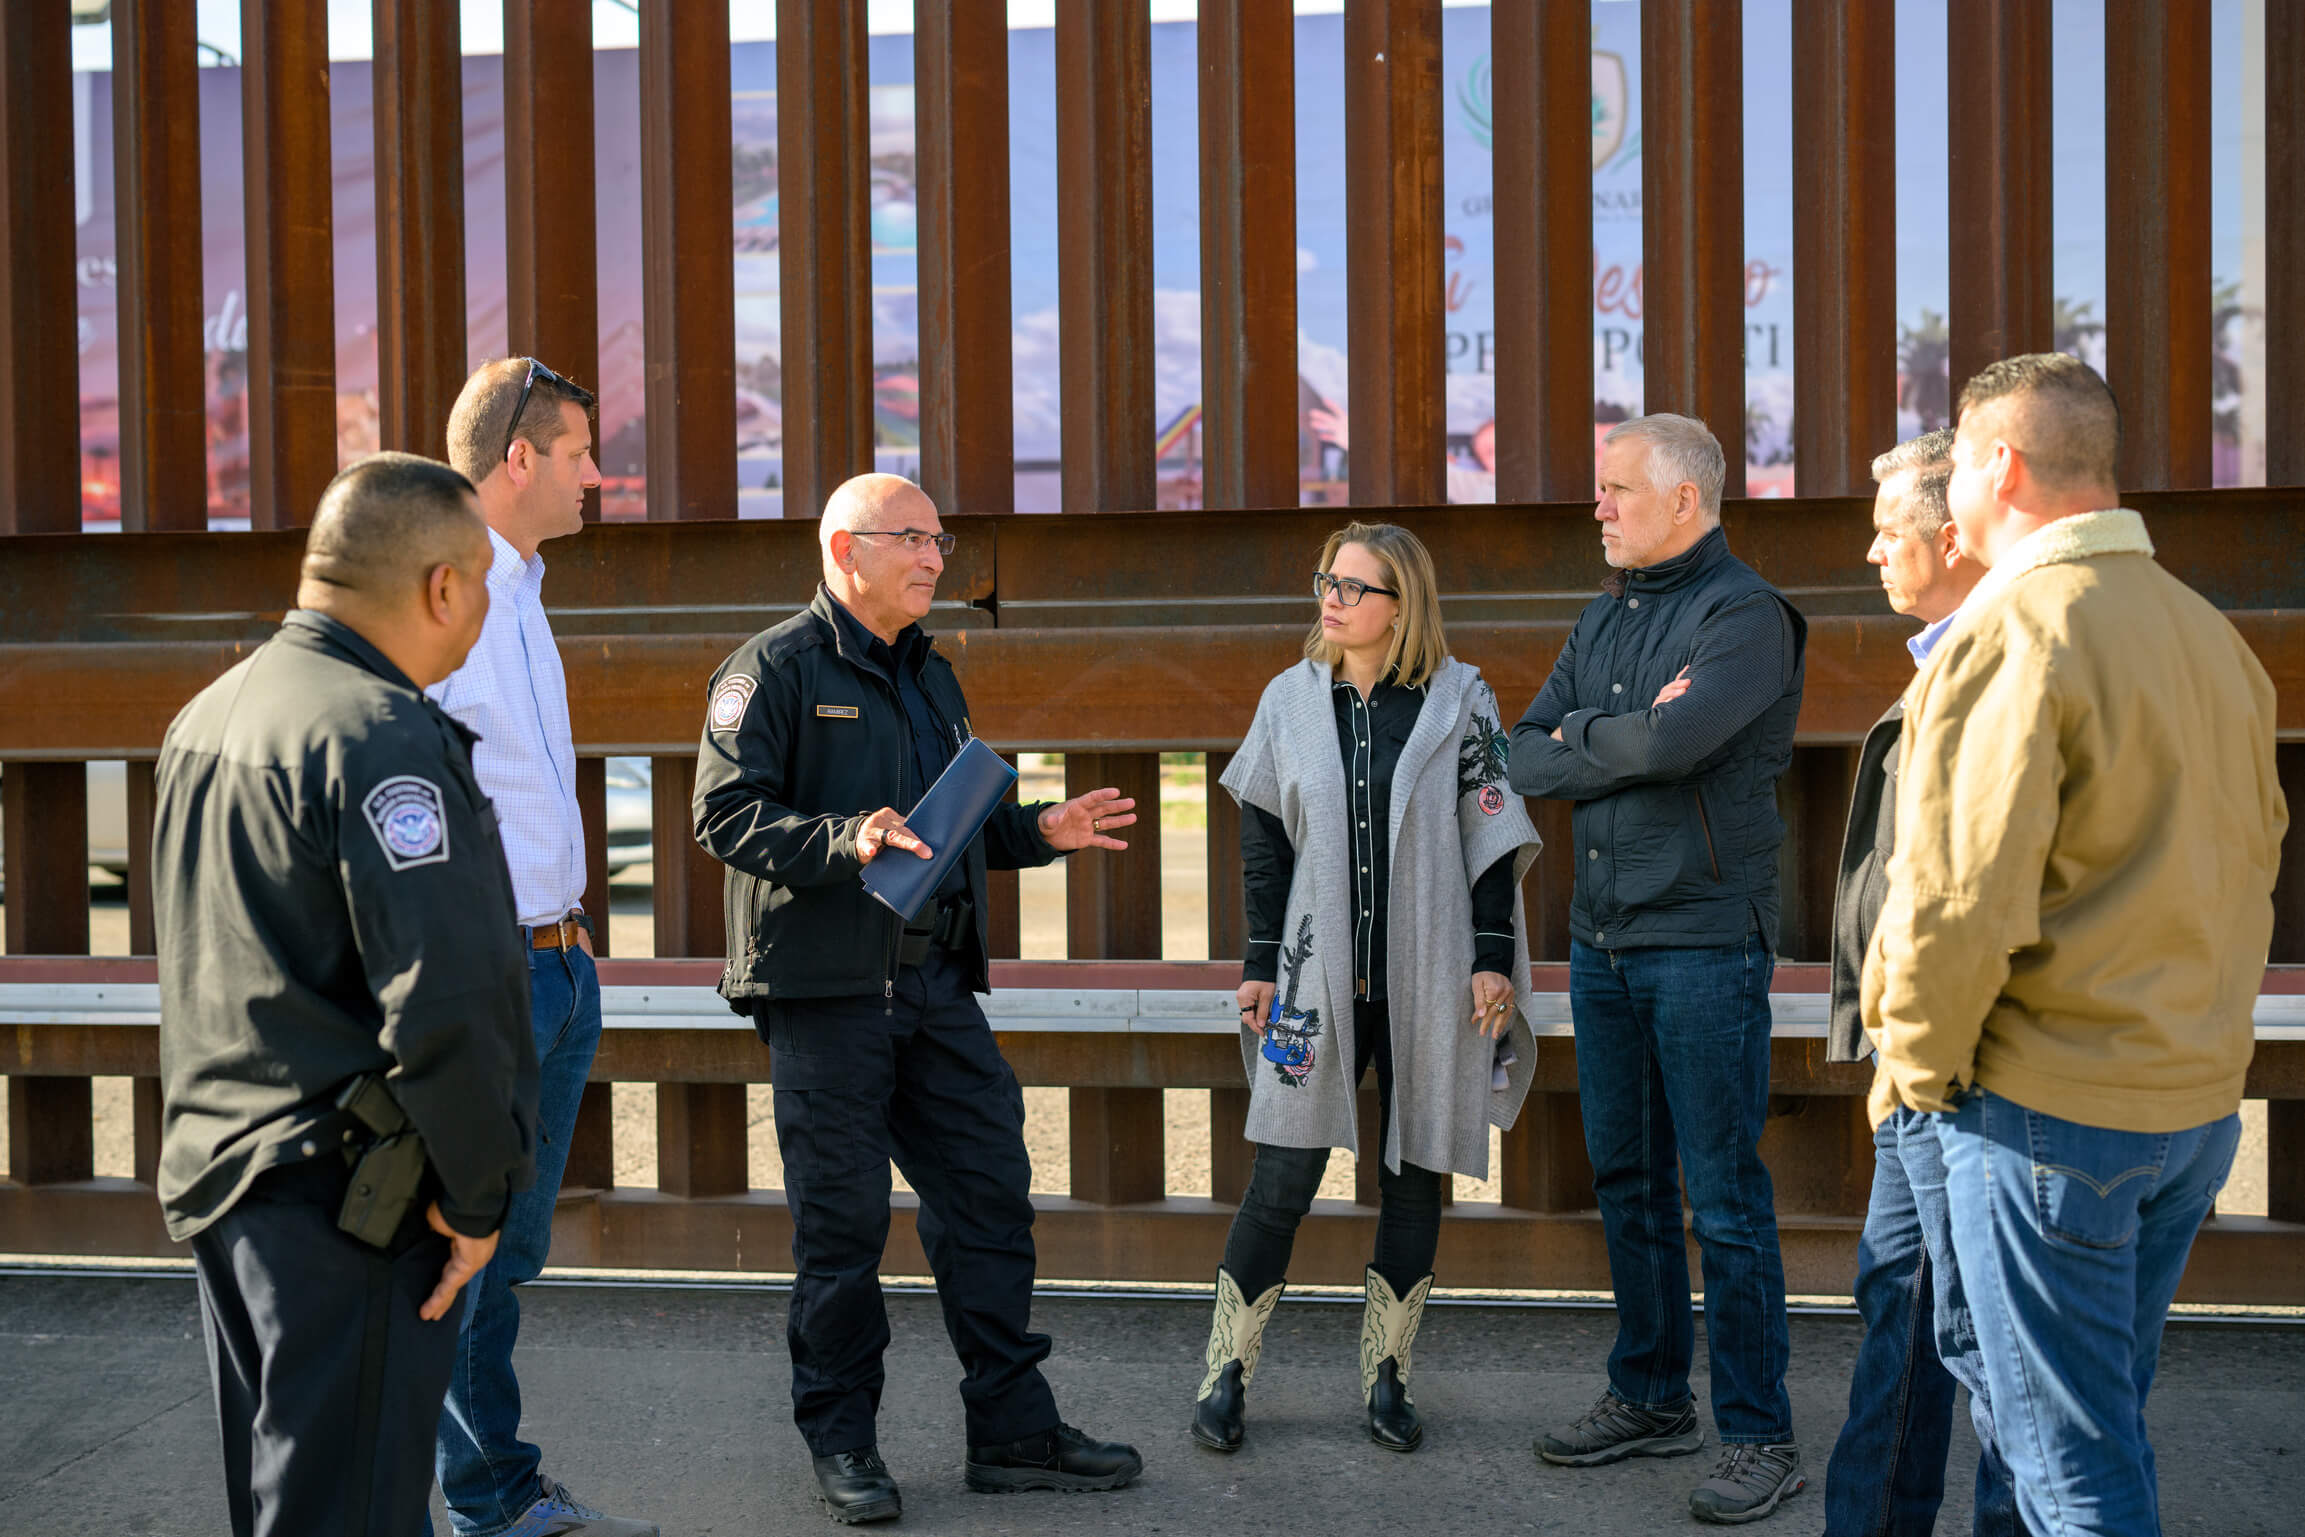 At Southwest Border, Sinema & Bipartisan Congressional Delegation Discuss Challenges Facing Arizona Border Communities